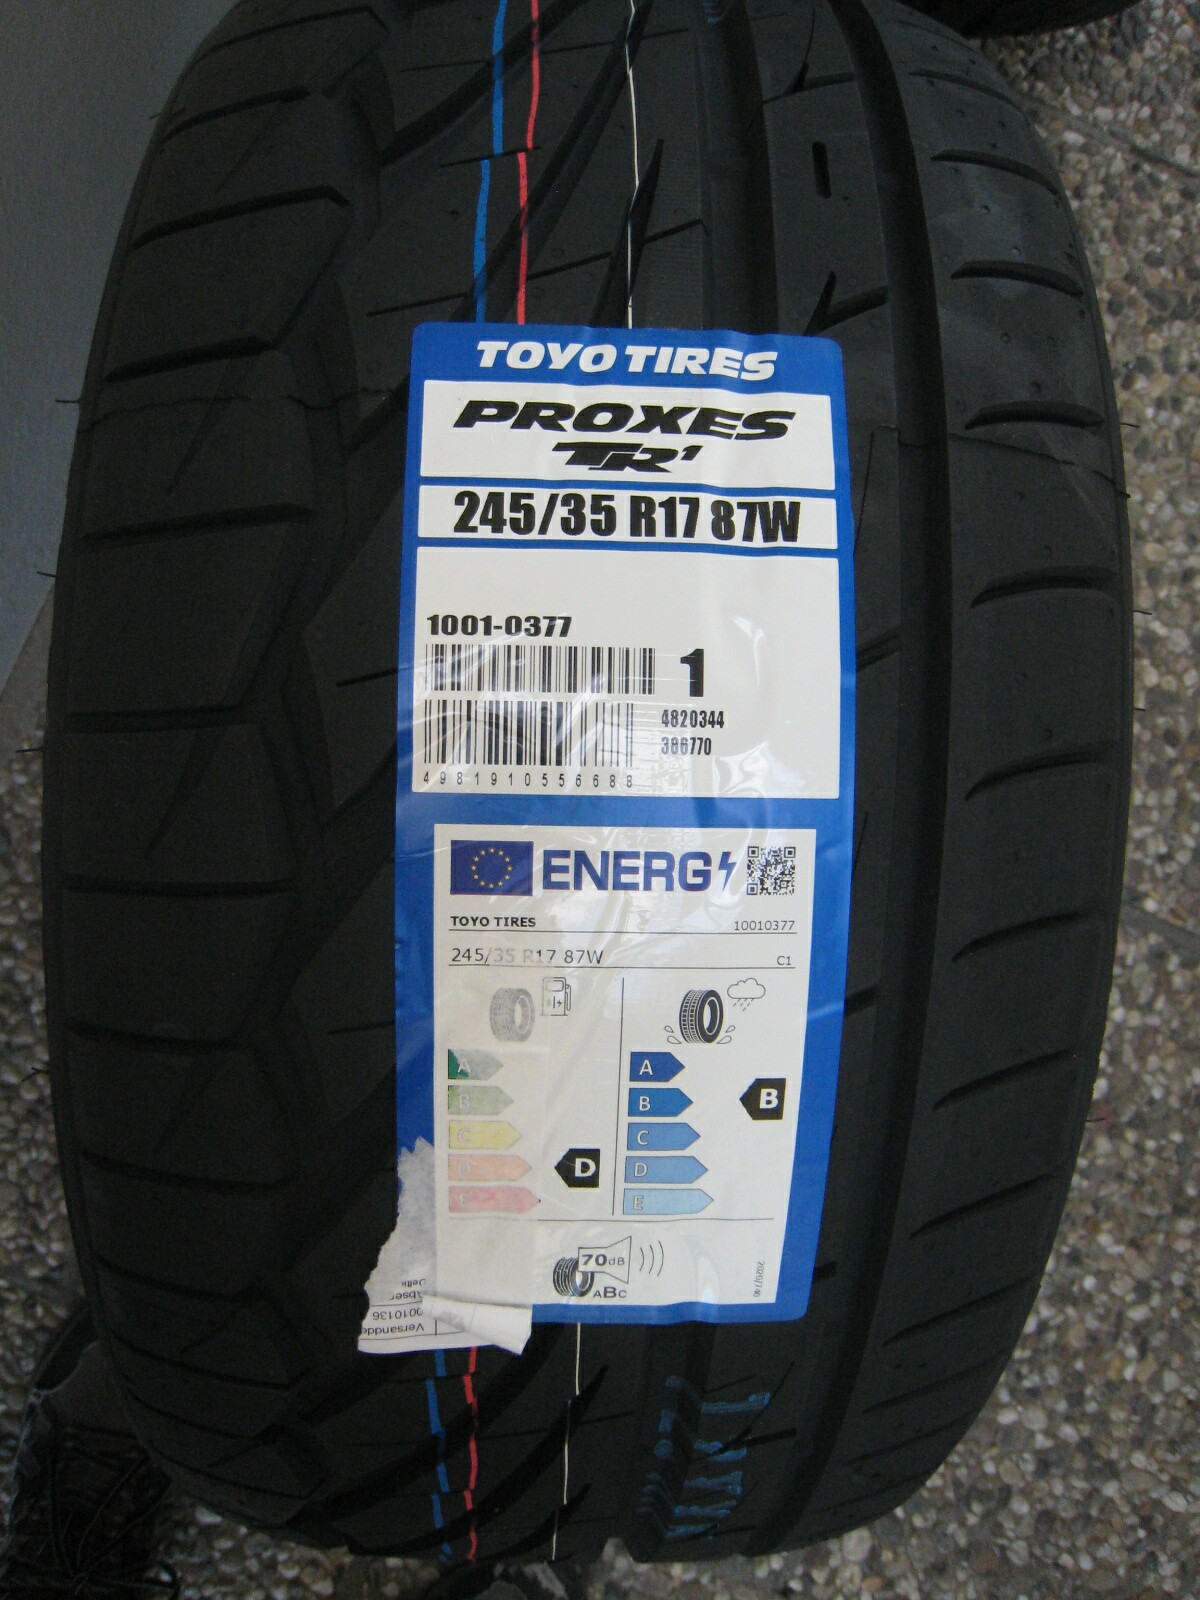 postre ir de compras pequeño Info: 245/35/17 Toyo Tires are available again - S14.net